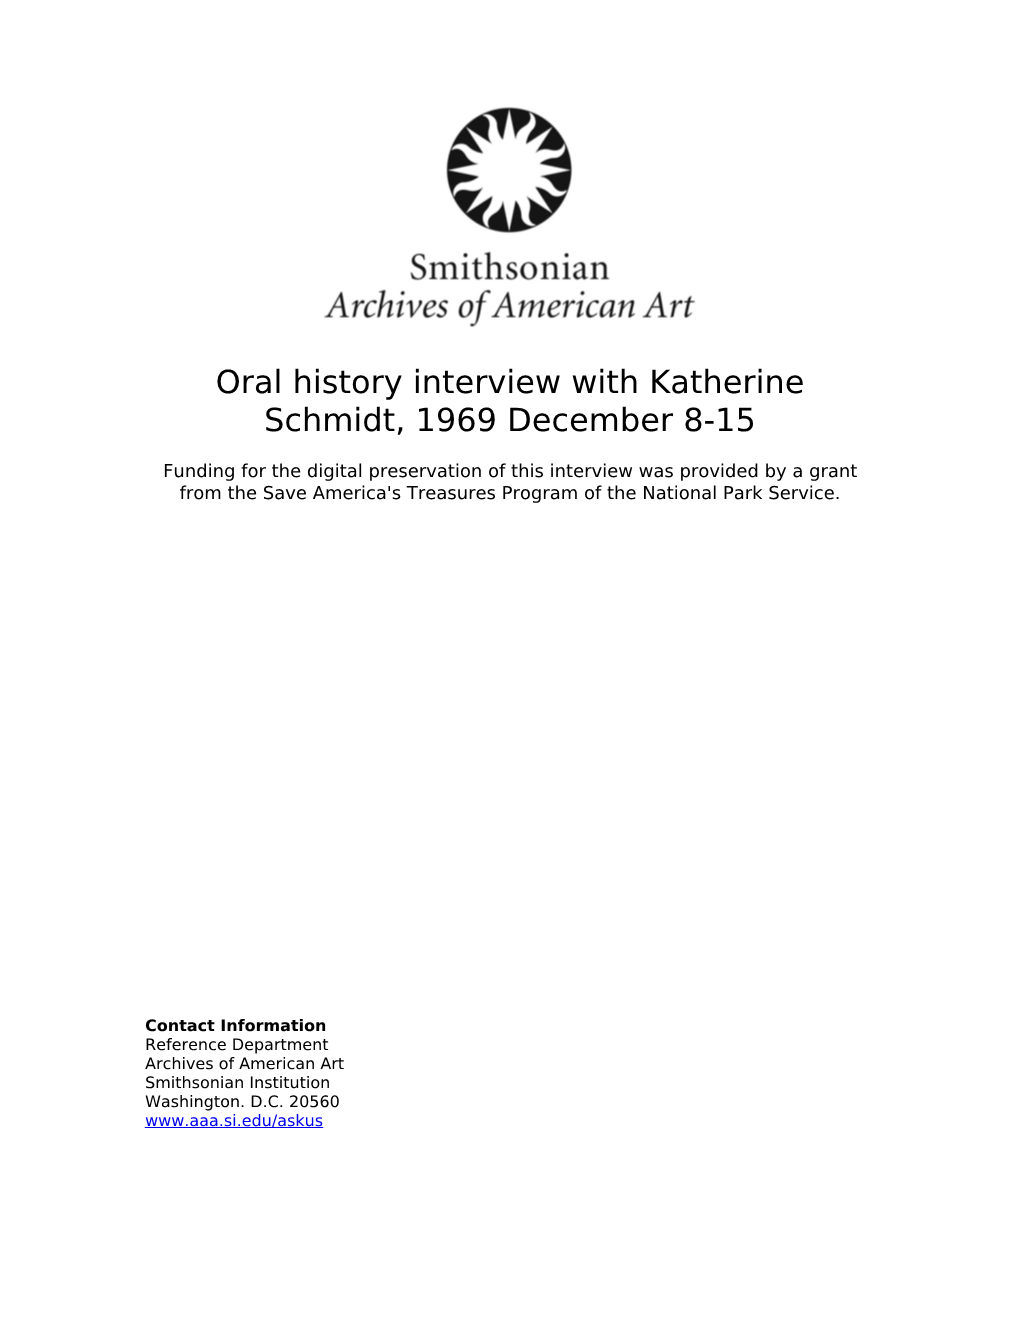 Oral History Interview with Katherine Schmidt, 1969 December 8-15